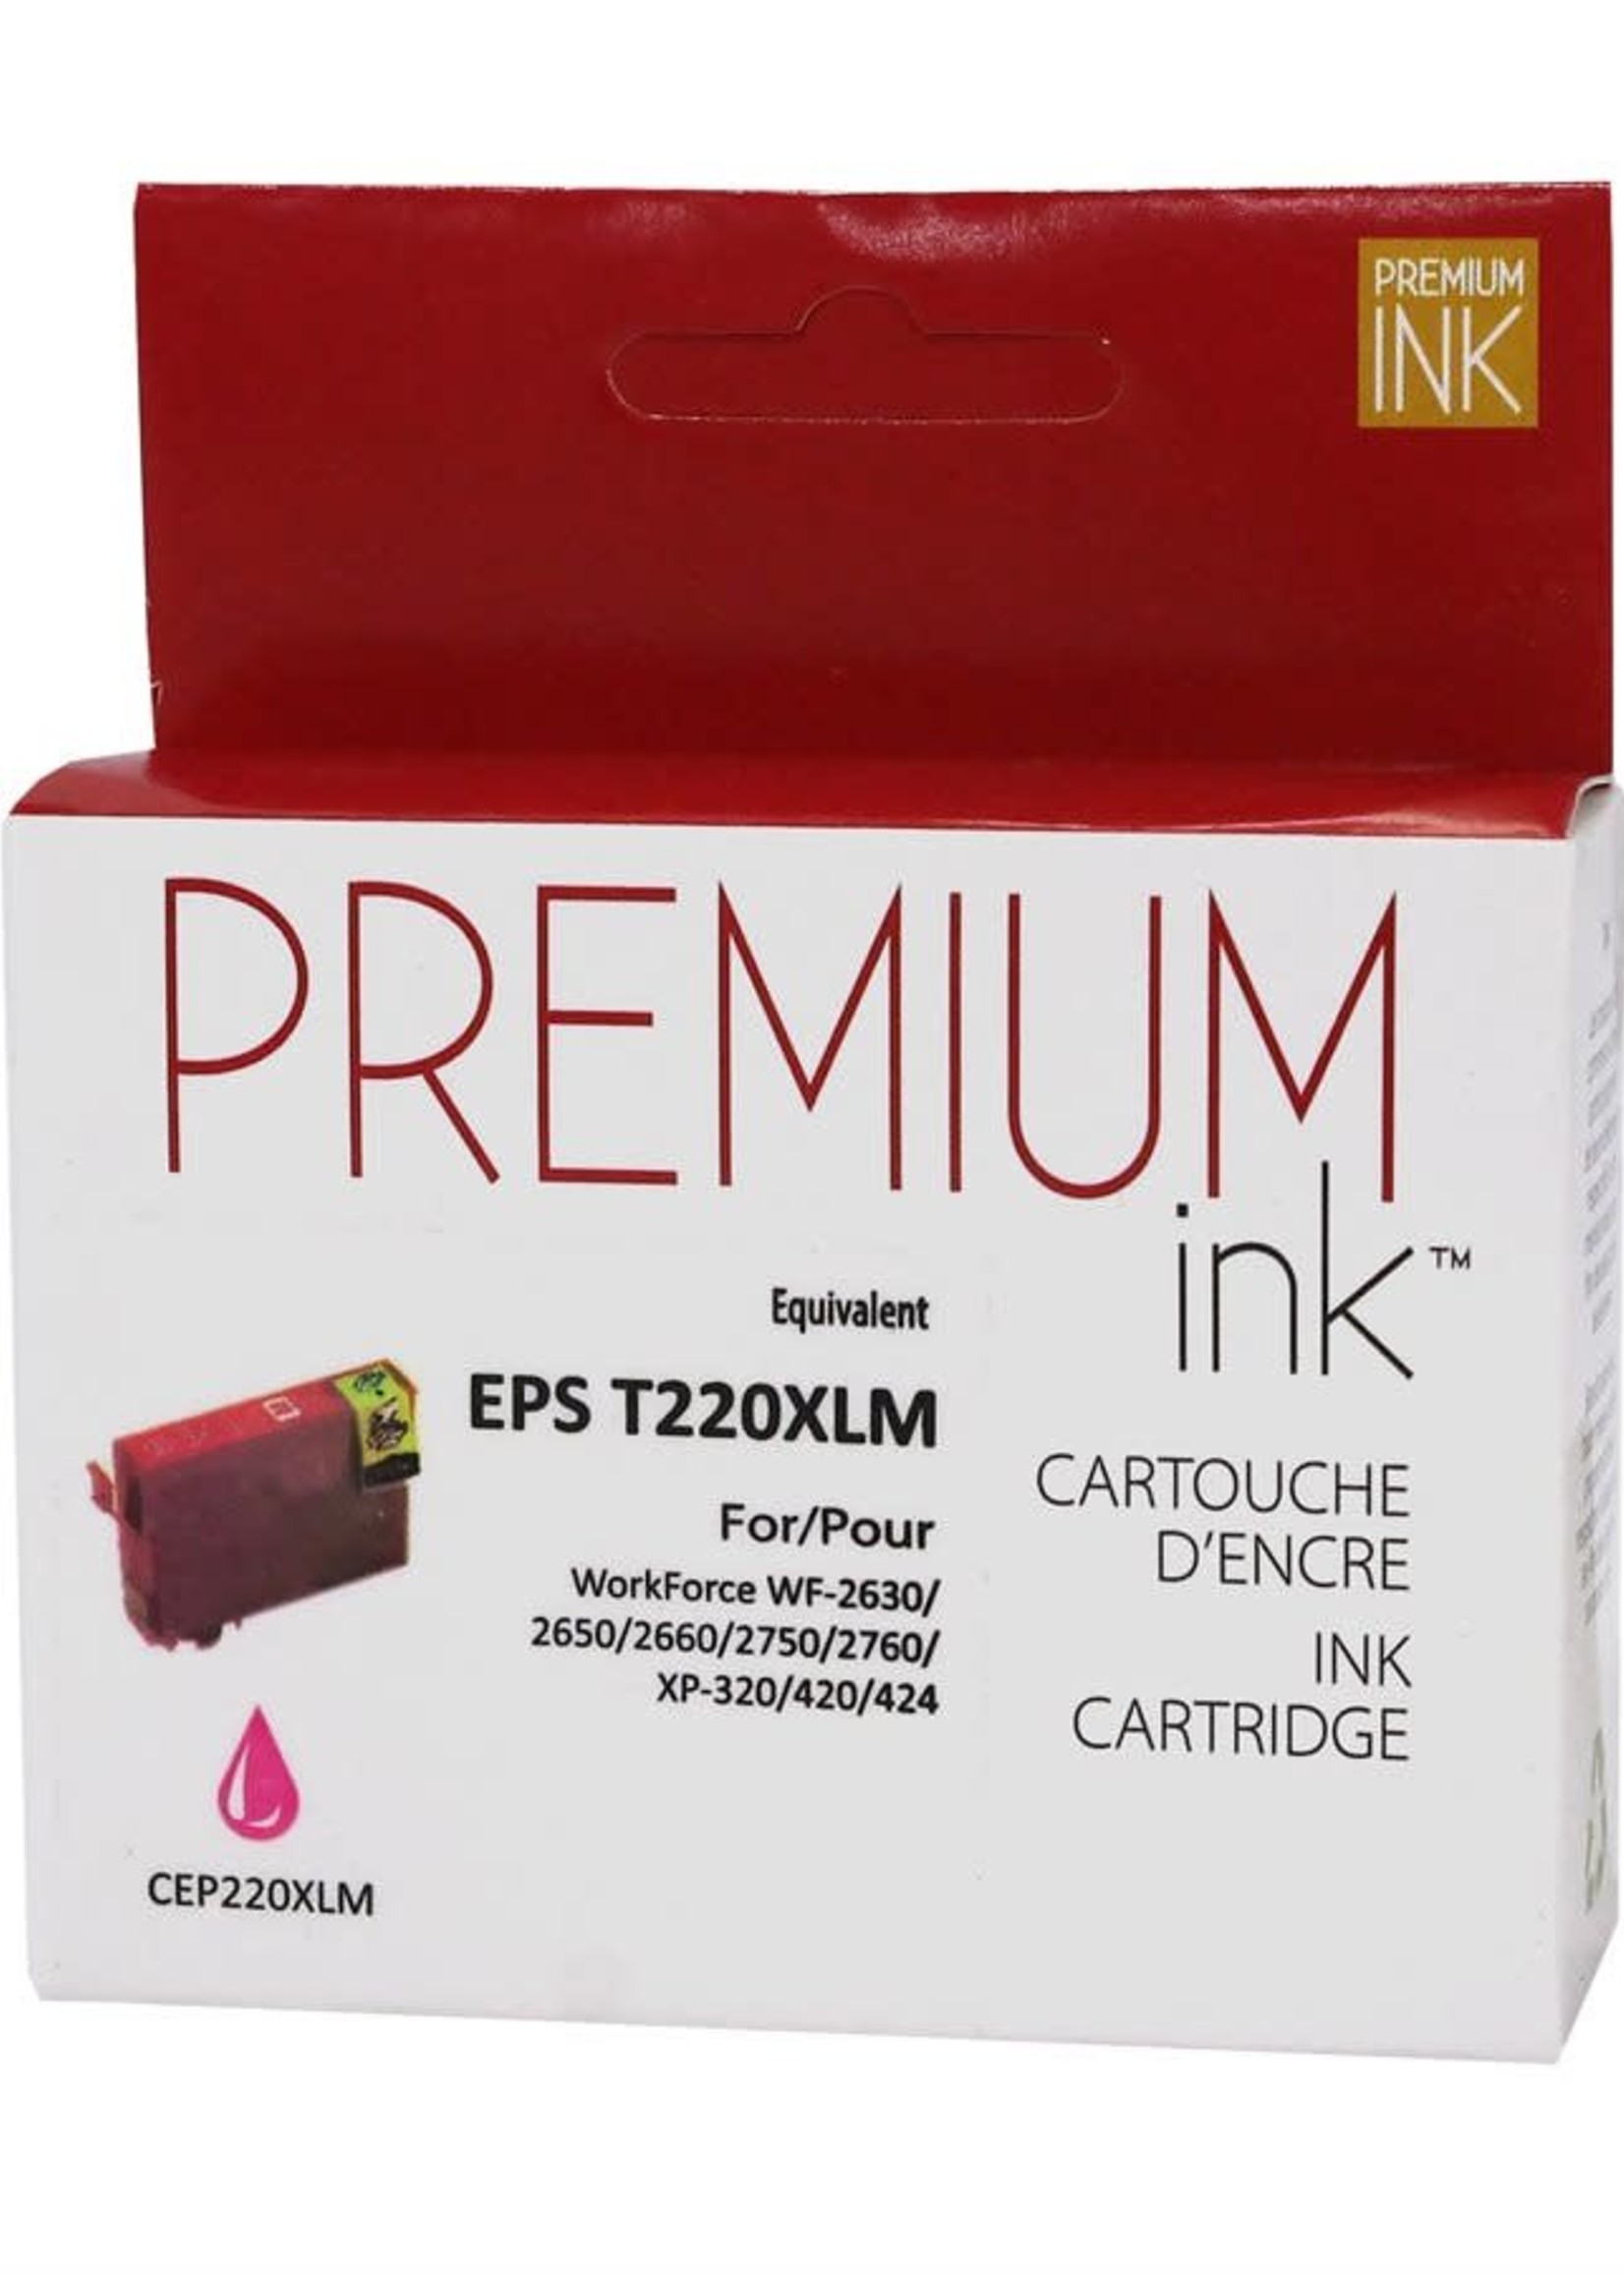 EPS T220XL M PREMIUM INK